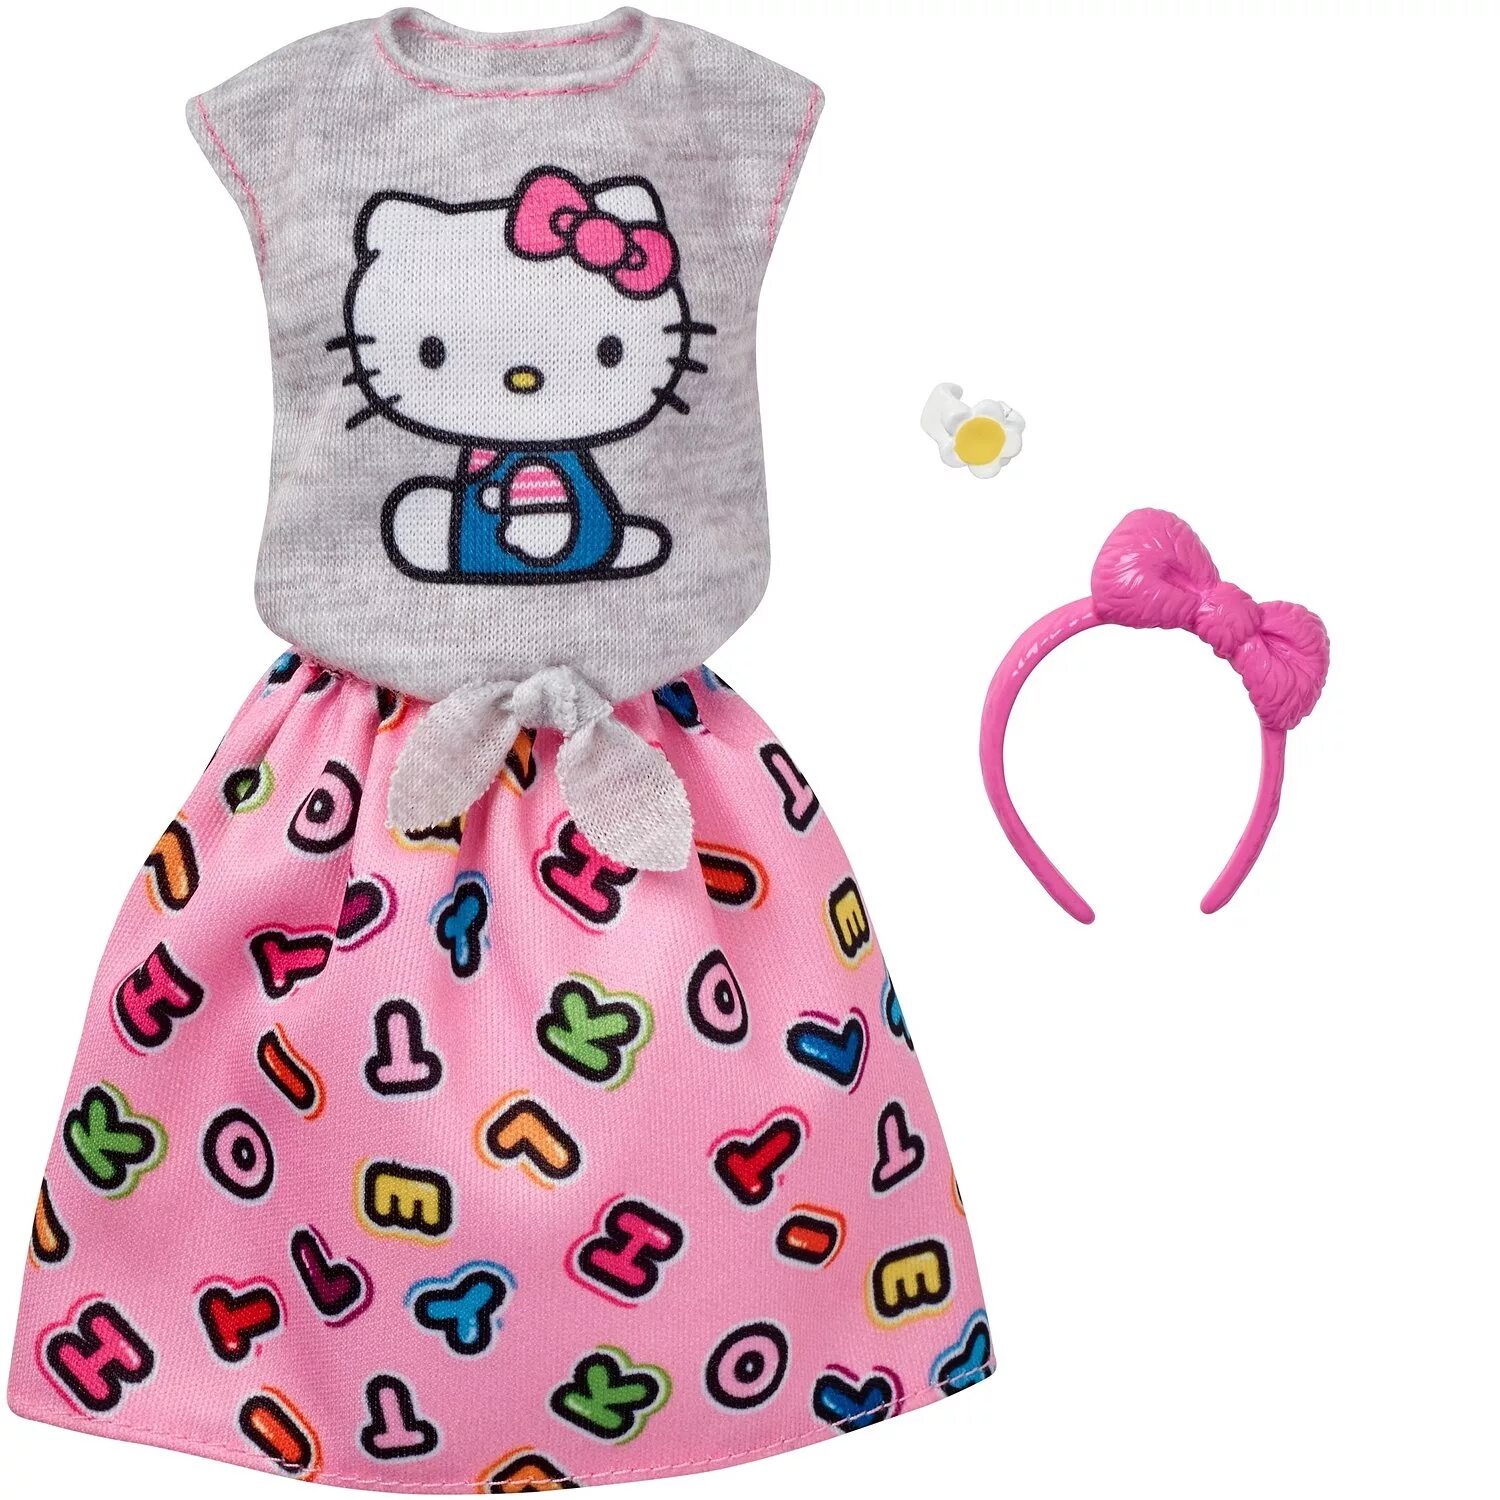 Хэллоу одежда. Одежда для Барби Хелло Китти. Хэллоу Китти Барби одежда. Одежда для кукол Барби Хелло Китти. Одежда для Барби hello Kitty одежда.